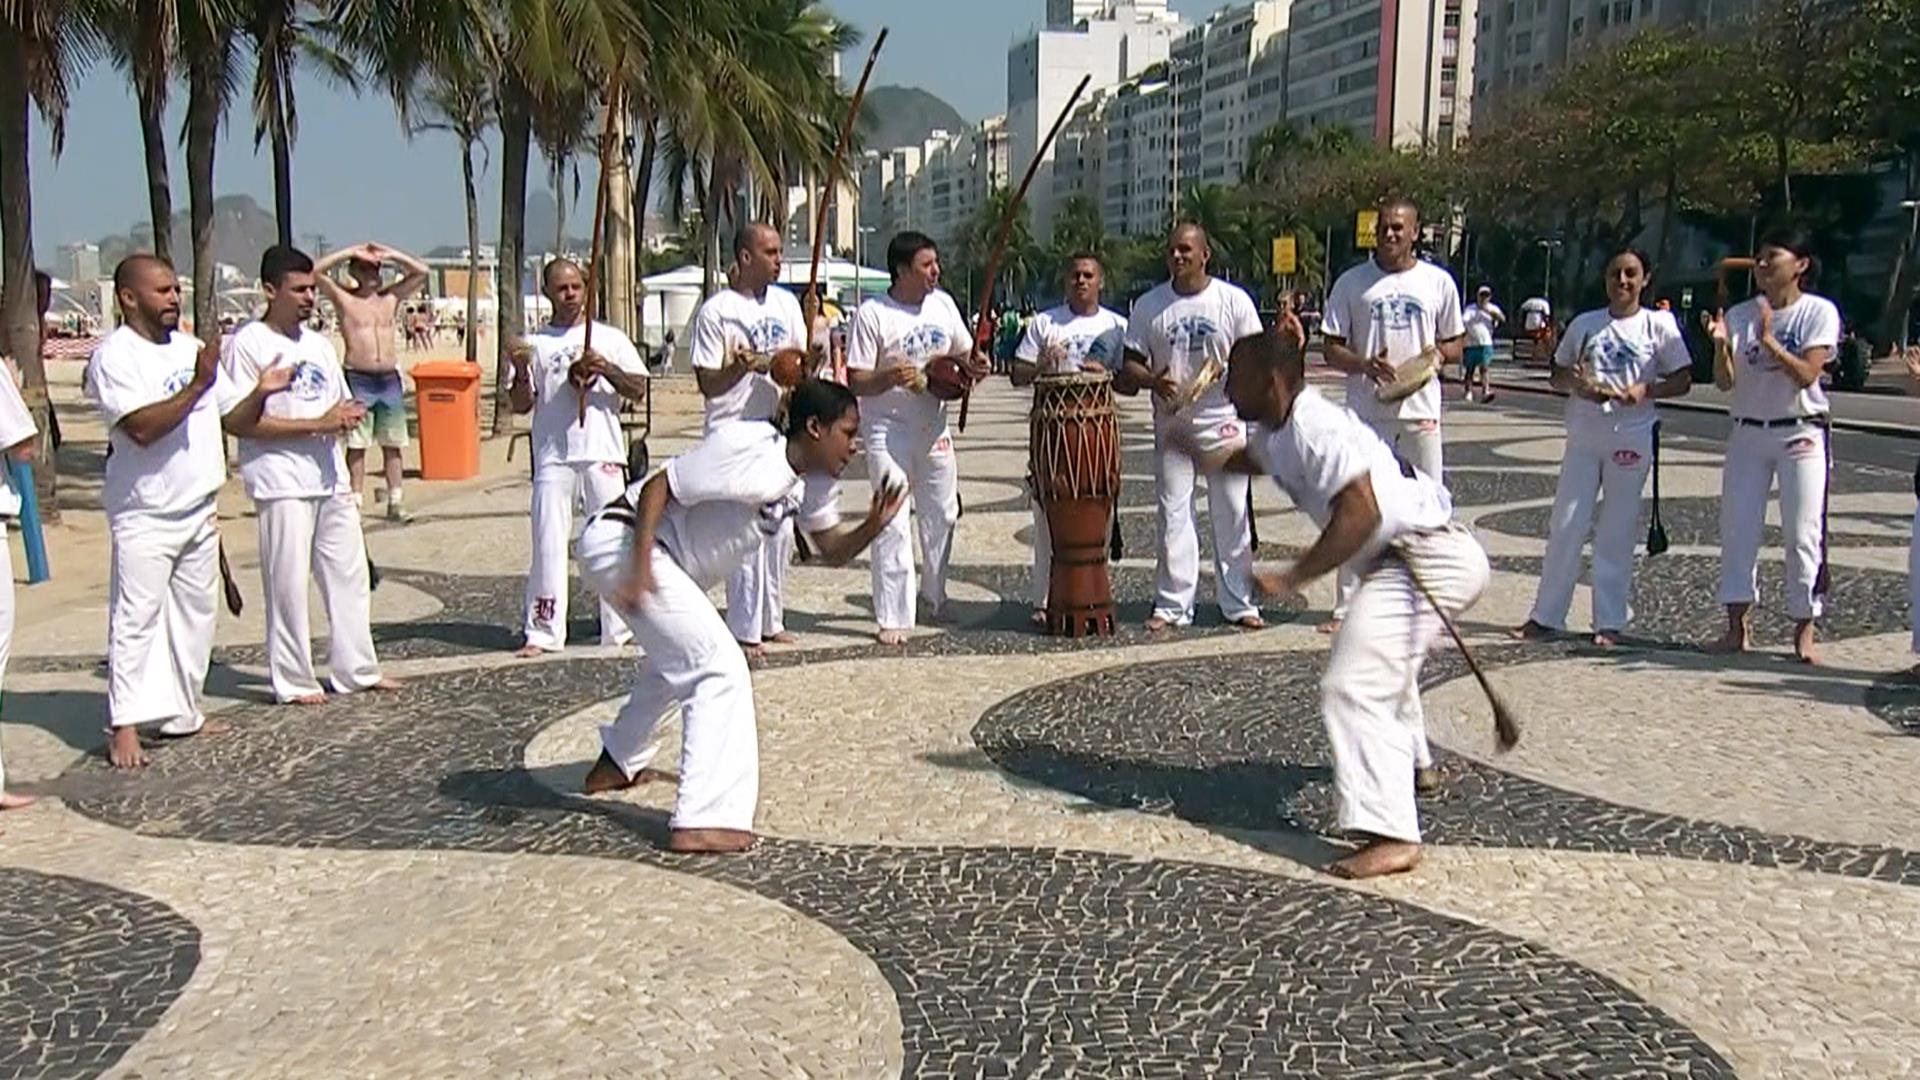 Capoeira: Meet Brazil’s unique blend of martial art and dance - TODAY.com